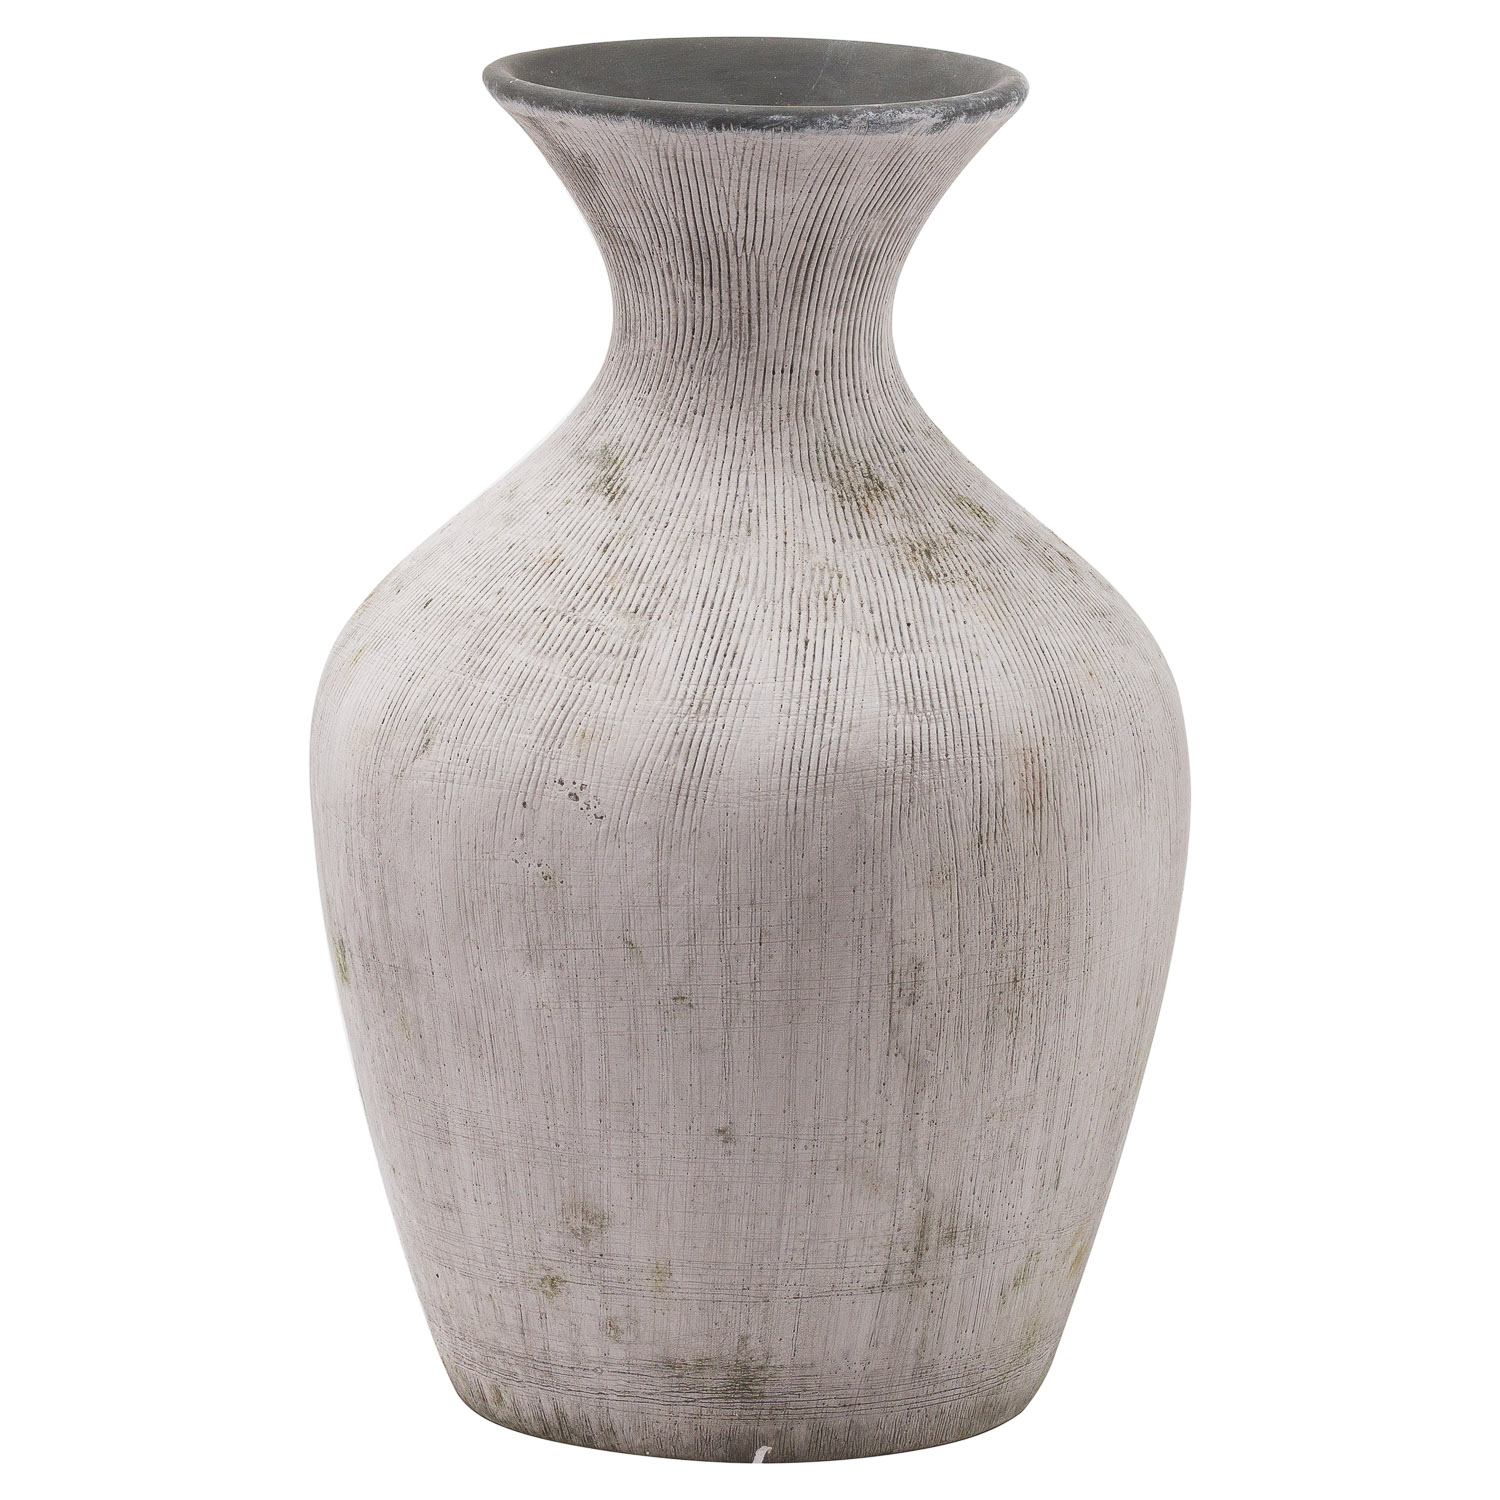 Bloomville Ellipse Stone Vase - Image 1